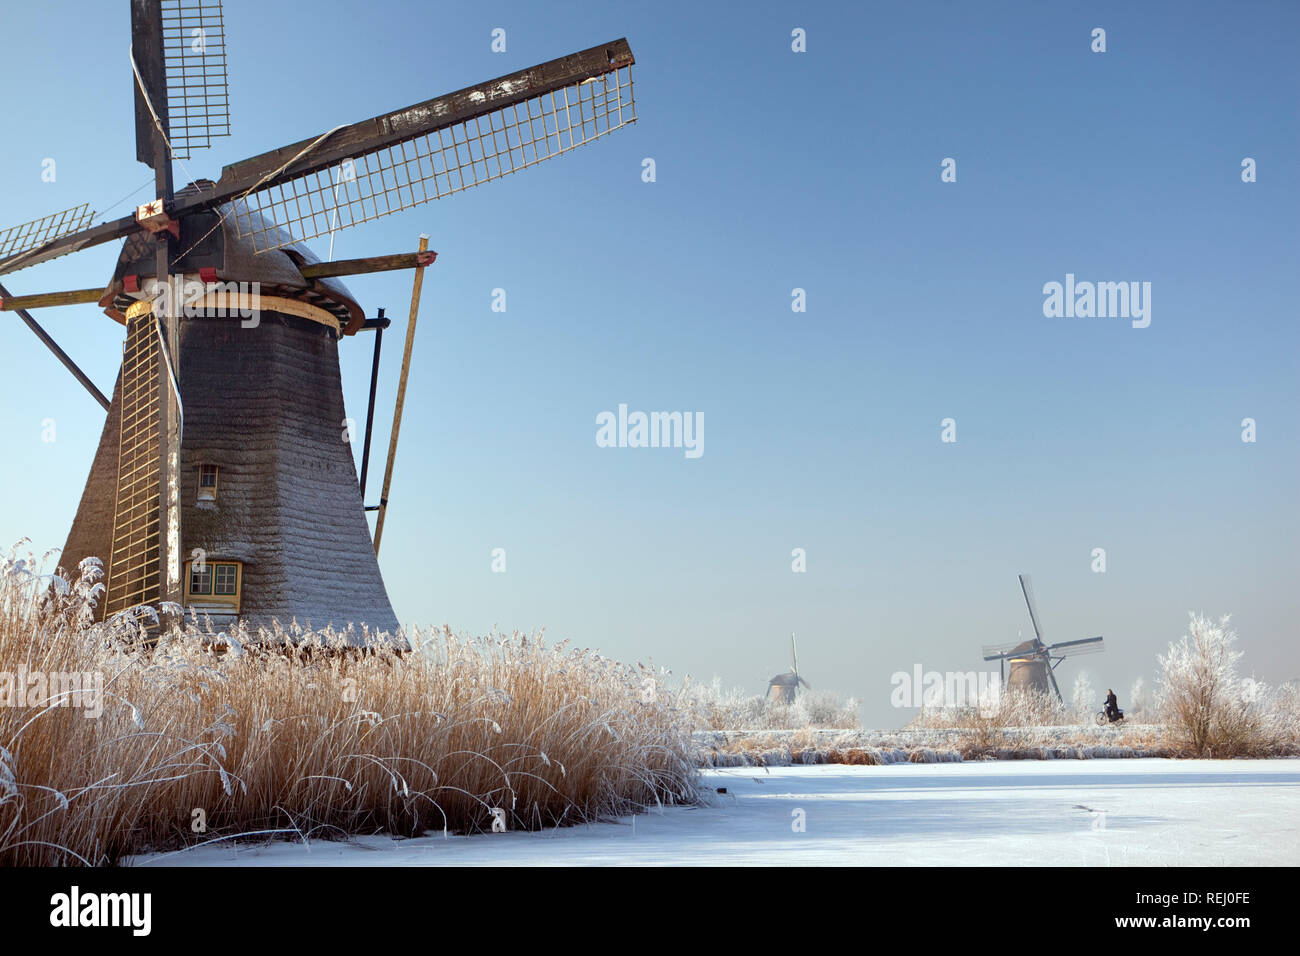 The Netherlands, Kinderdijk, Windmills in snow, Unesco World Heritage Site. Man on bicycle on dike. Stock Photo